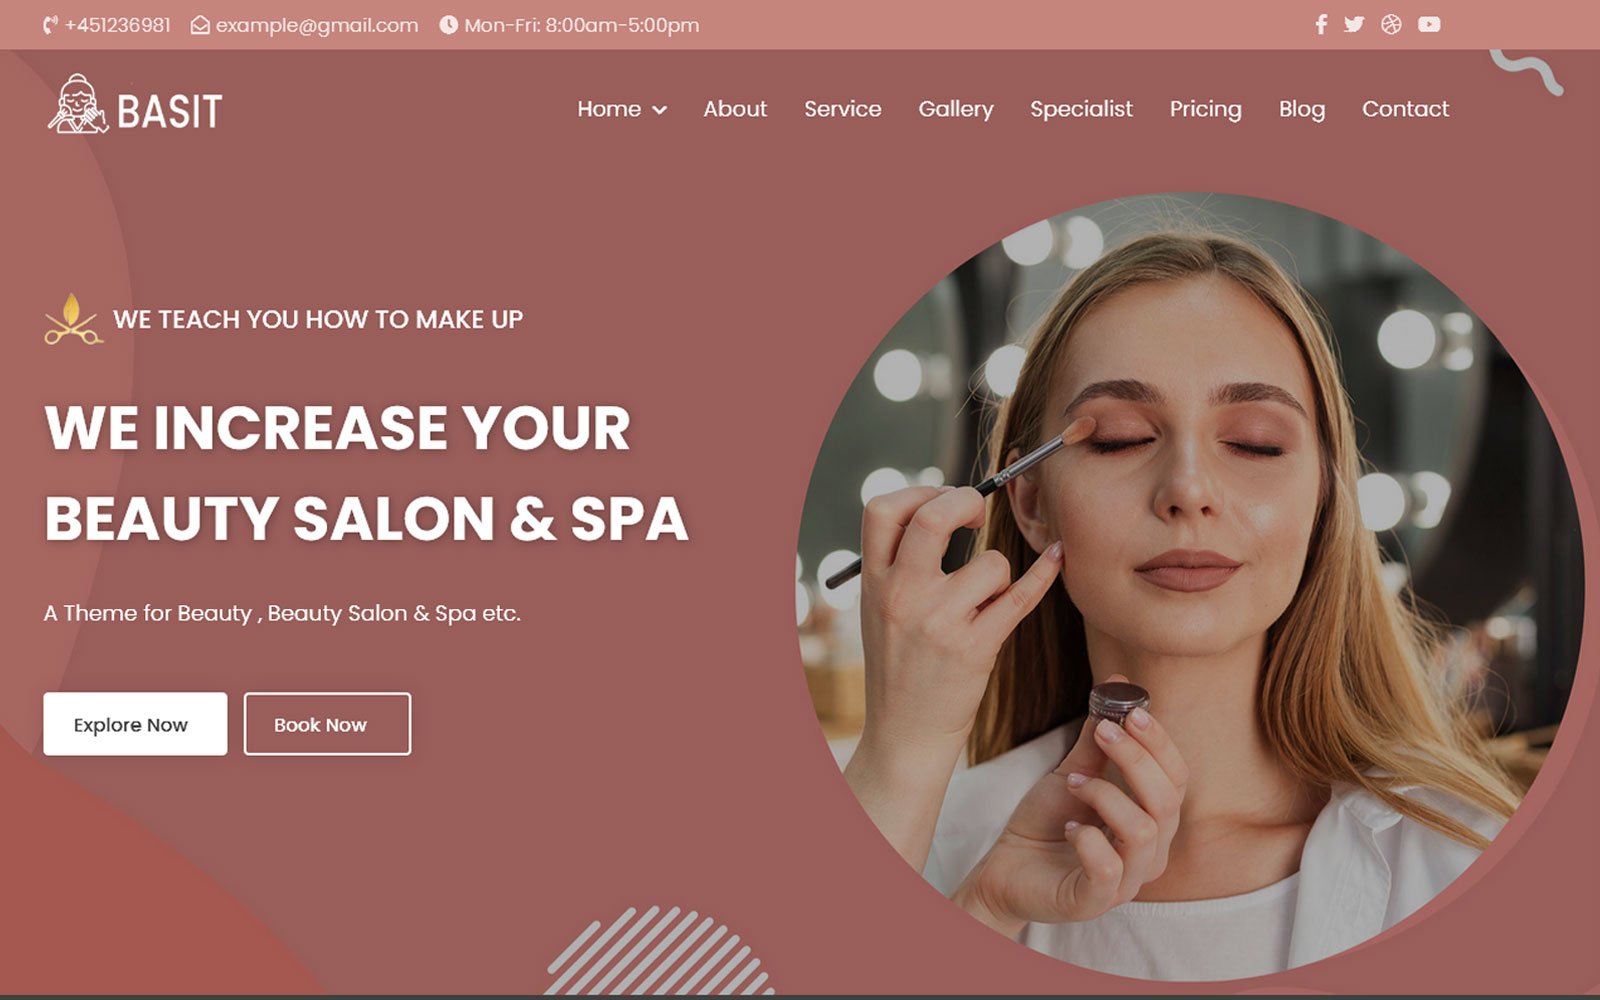 Basit - Beauty Salon & Spa Landing Page Template